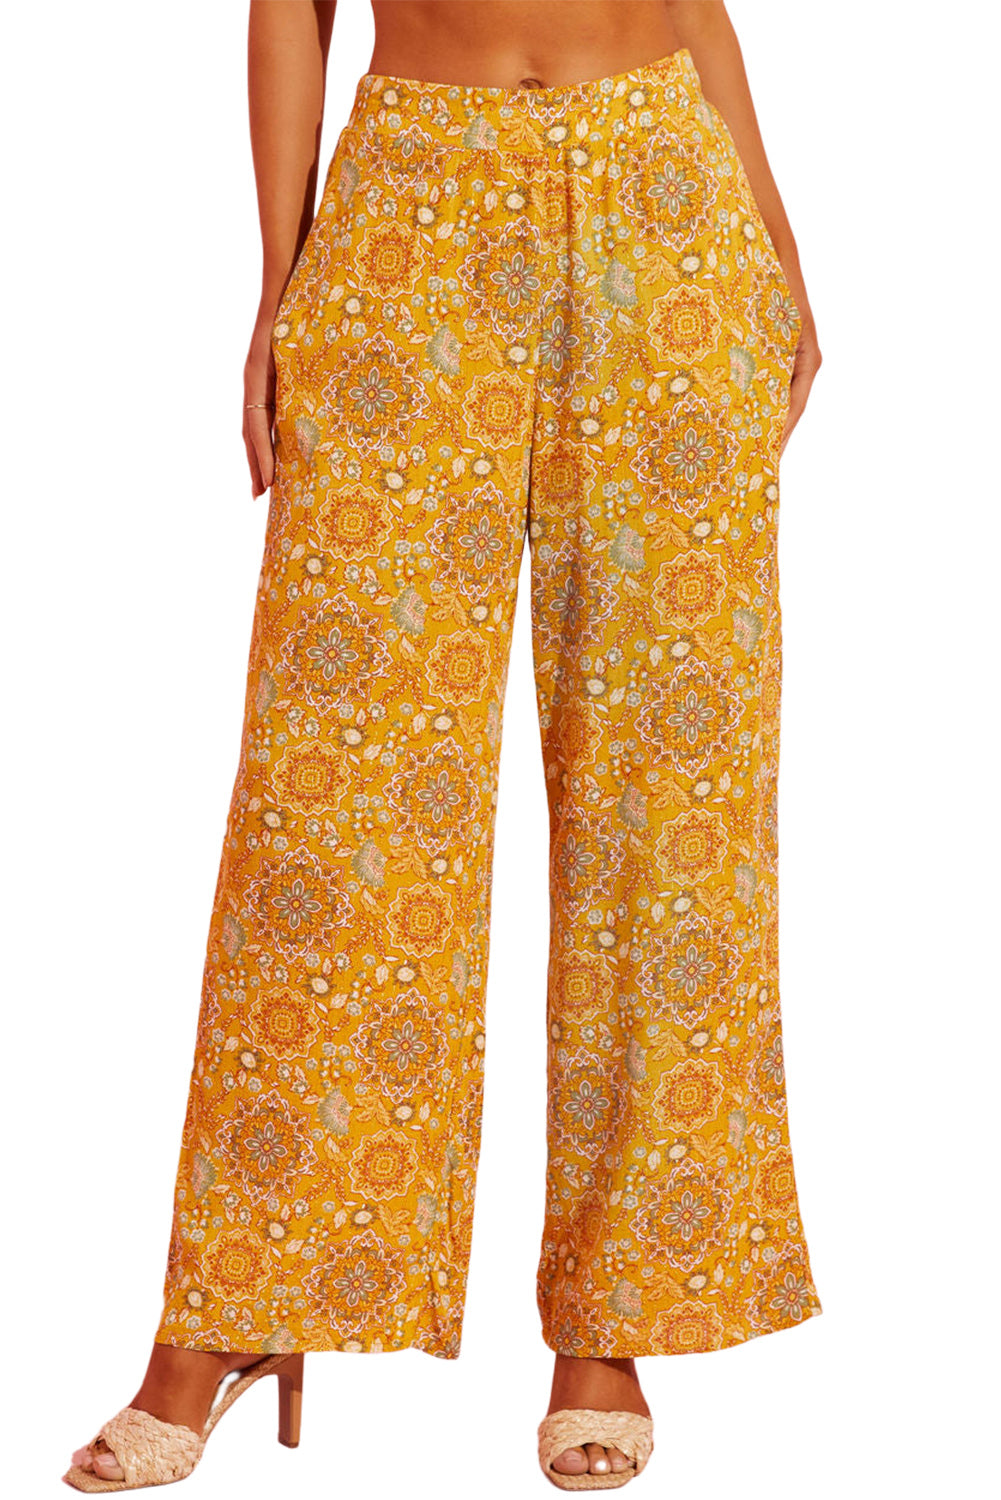 Pantaloni larghi con tasche con stampa floreale bohémien gialli